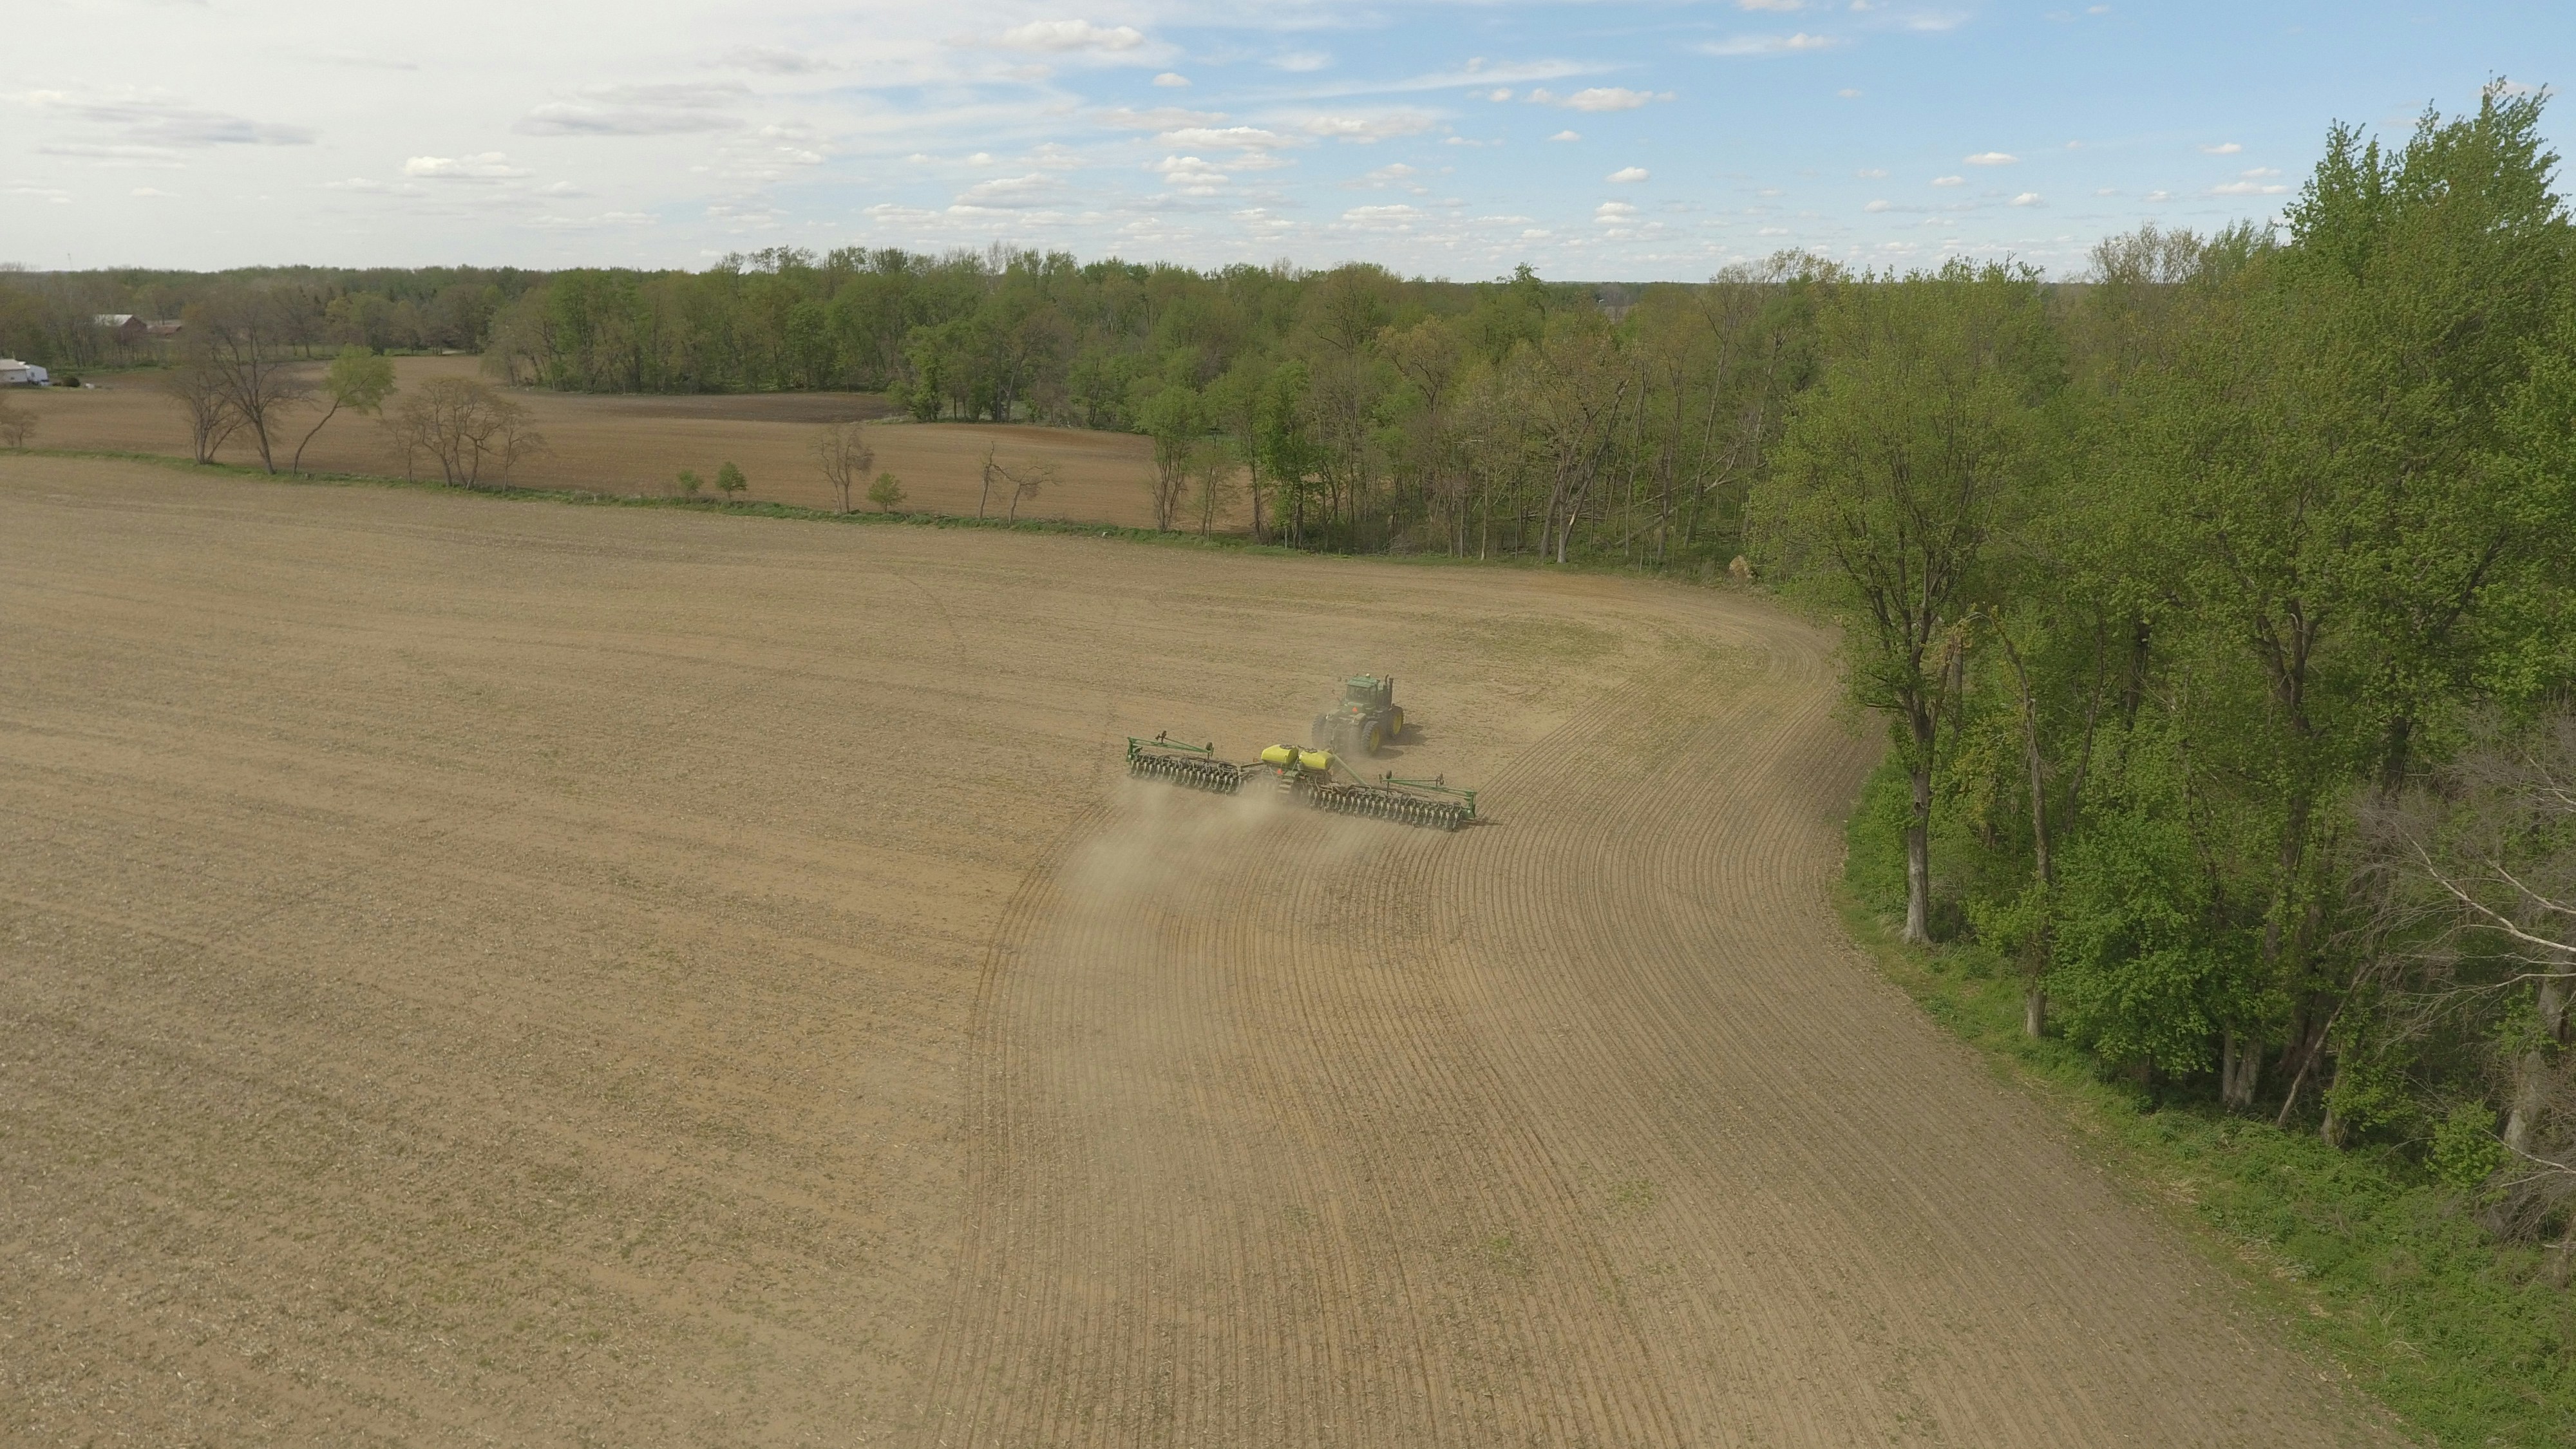 John Deere planter in a Michigan field.